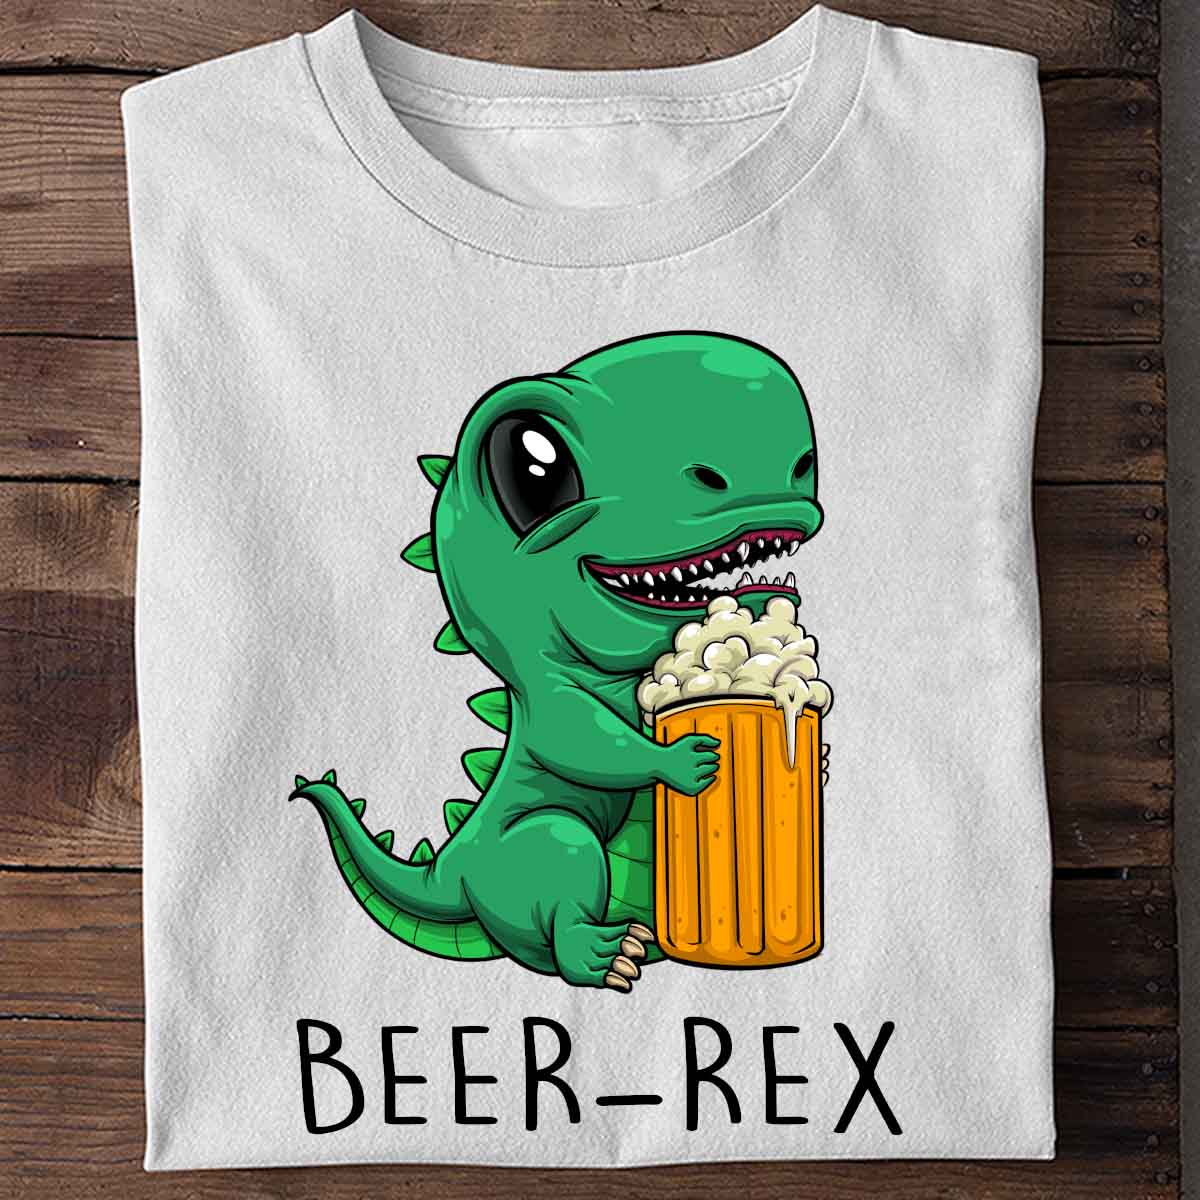 Beer-Rex Dinosaur - Shirt Unisex